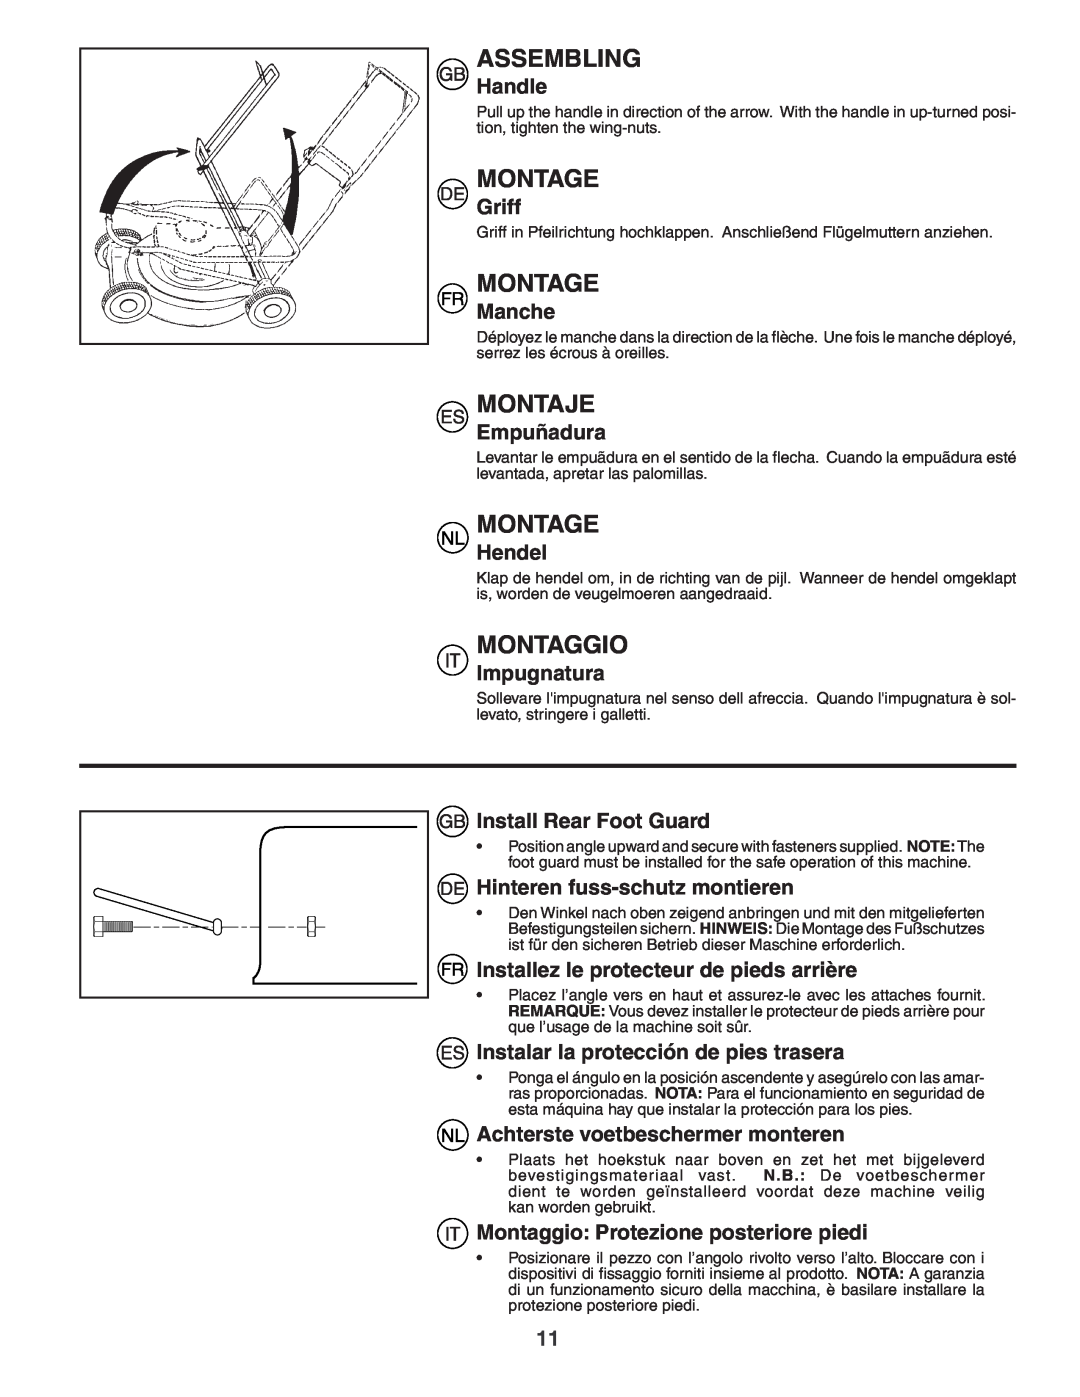 Husqvarna J50S instruction manual Assembling, Montage, Montaje, Montaggio 